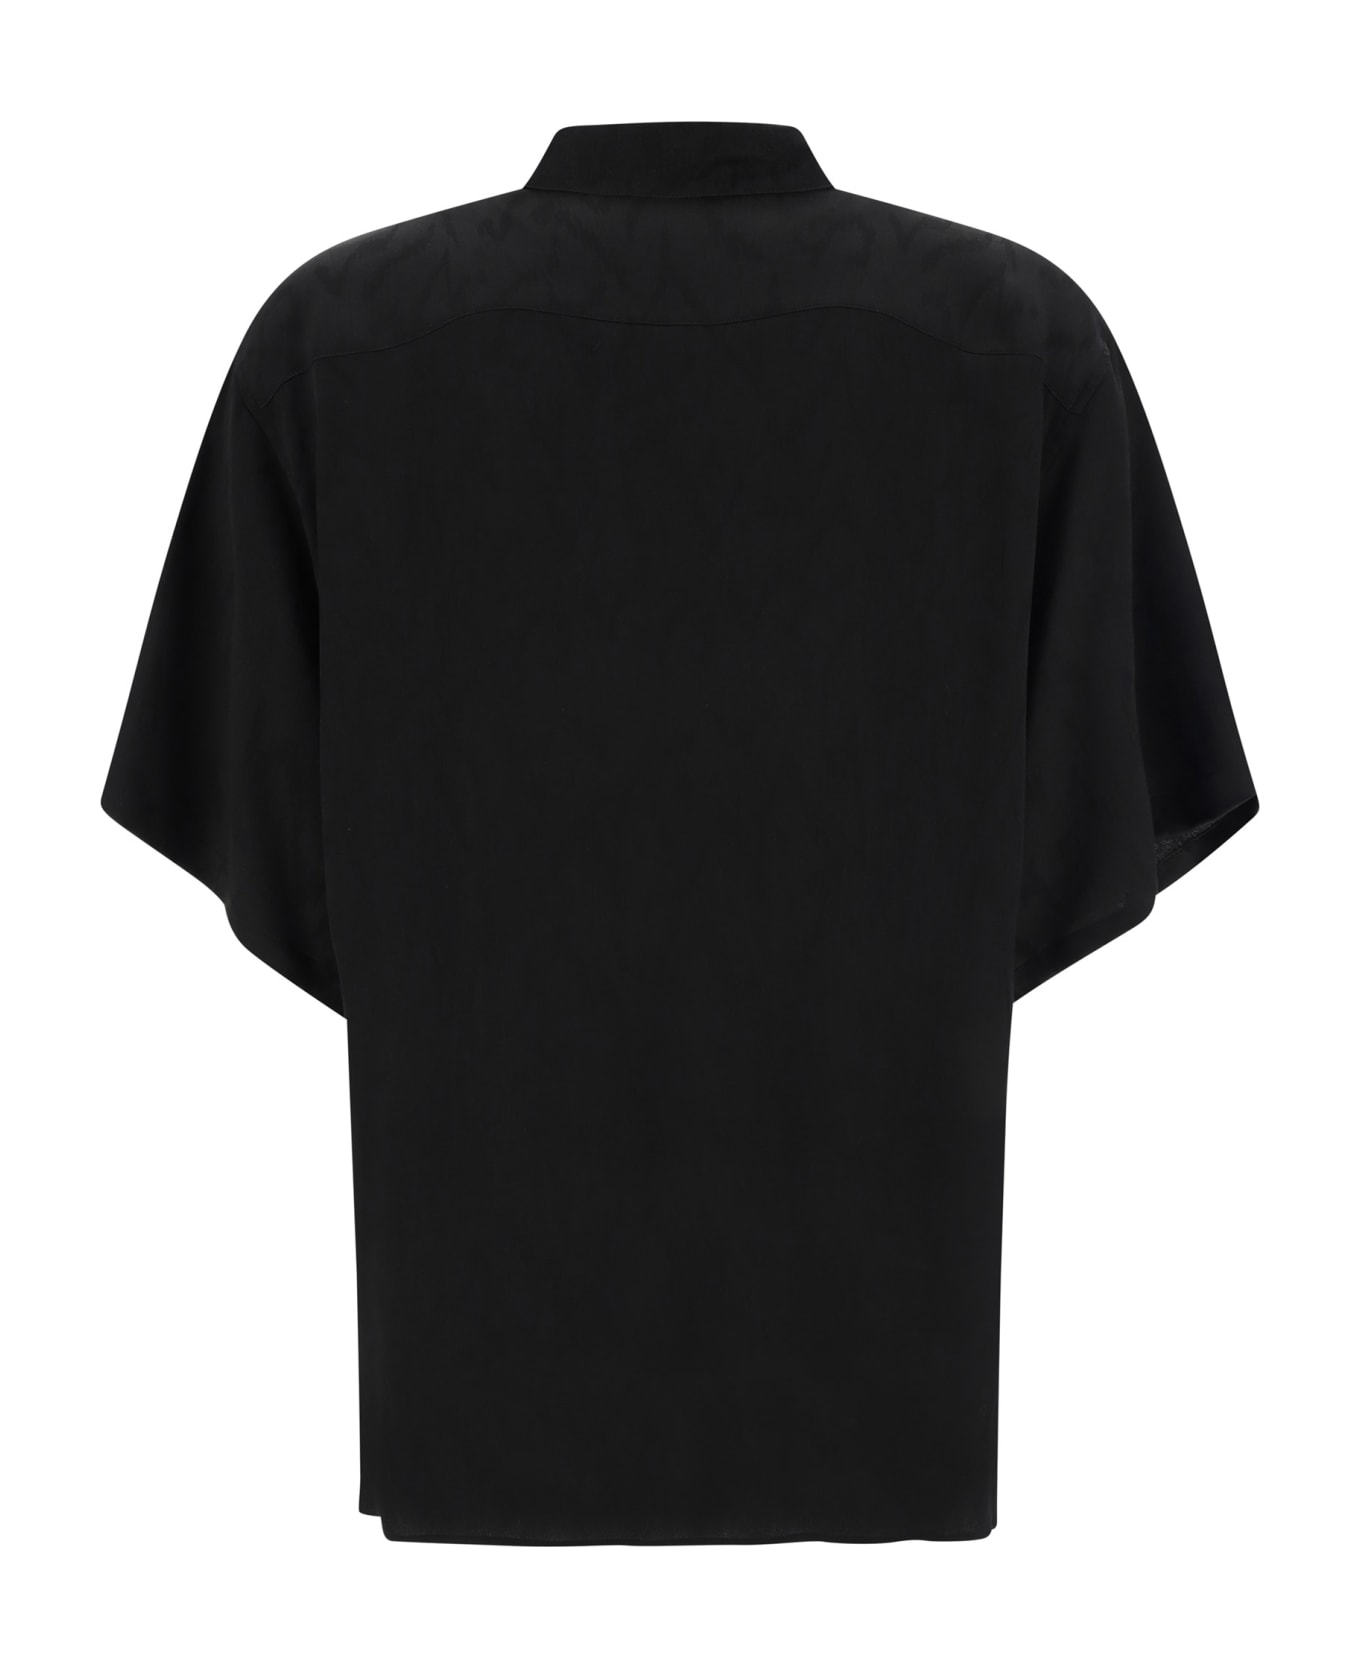 Saint Laurent Silk Shirt - Black